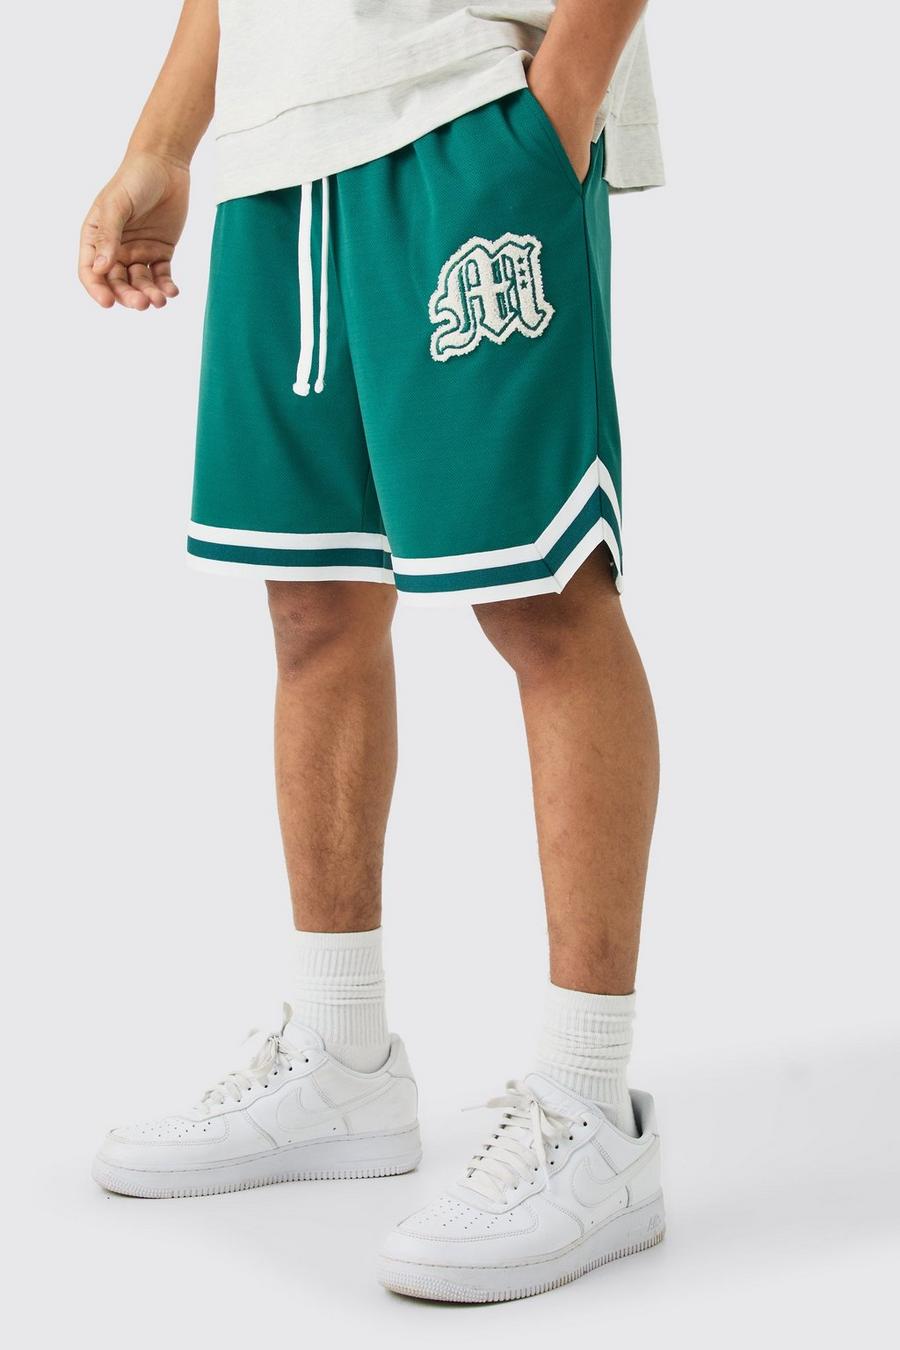 Lockere Mesh Basketball-Shorts mit M-Applikation, Green